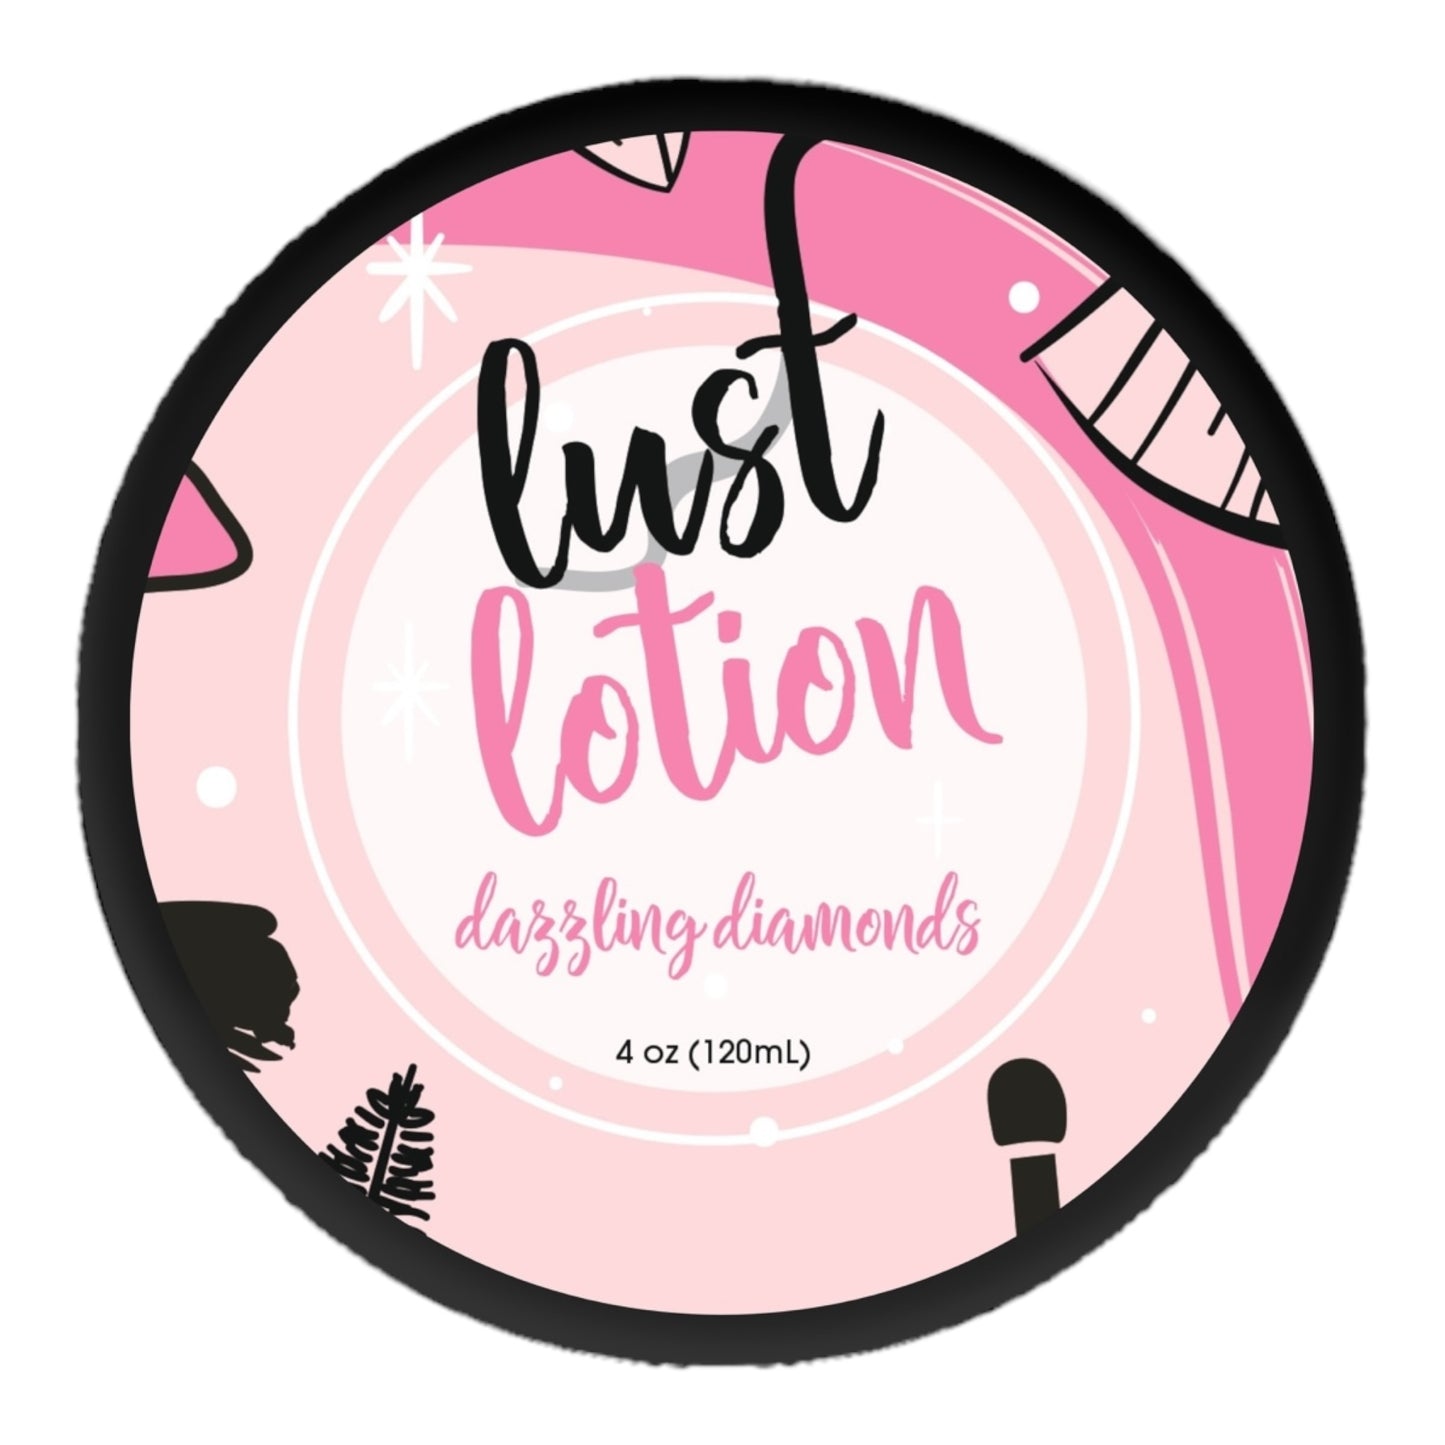 Lust Lotion